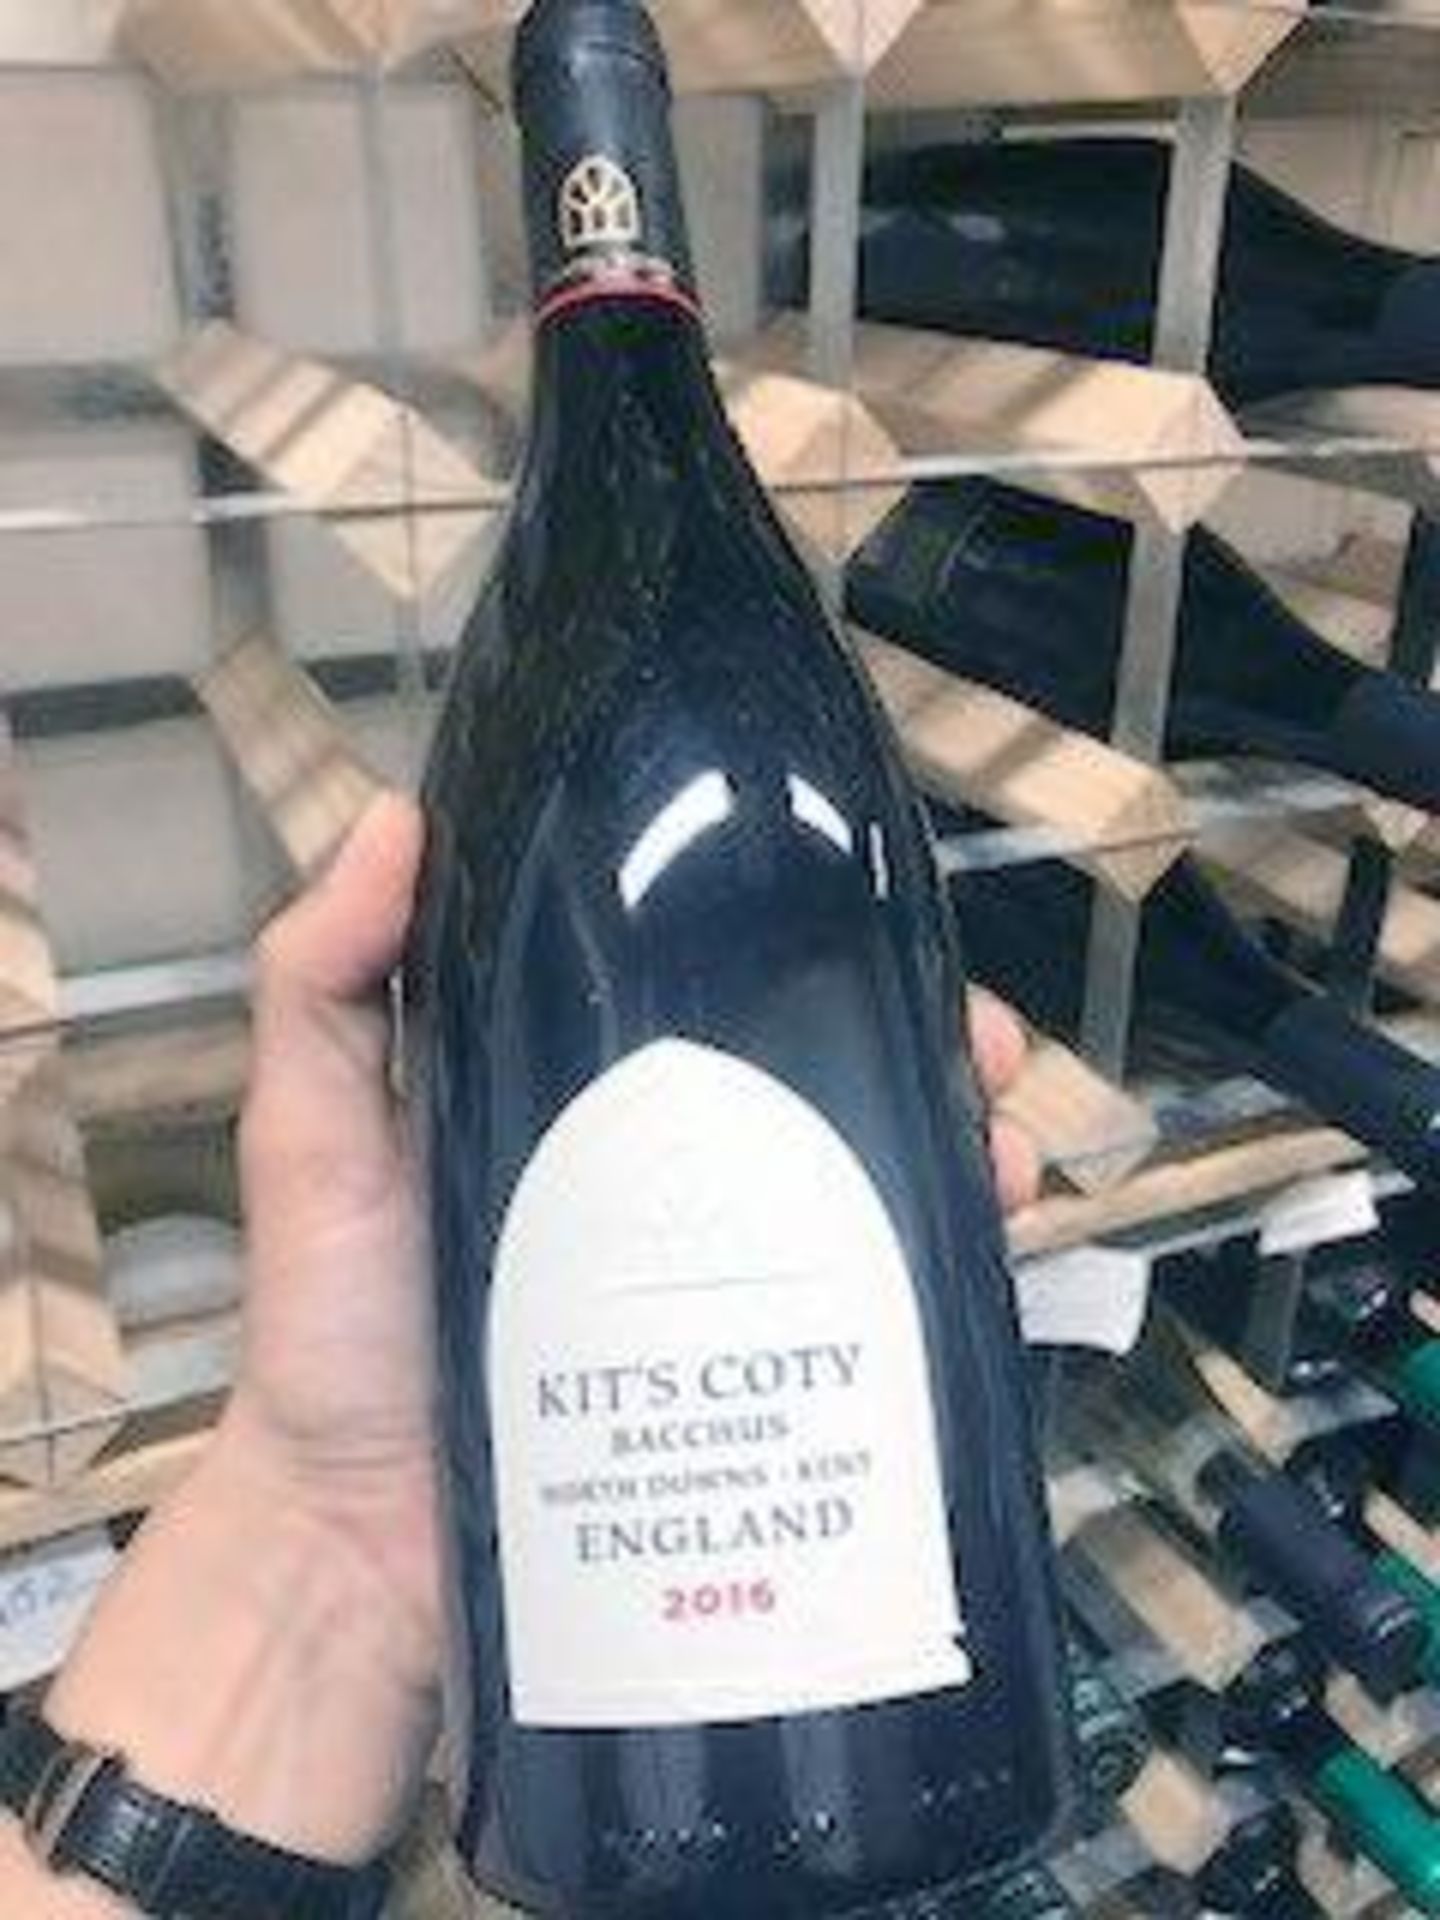 White Wine --Kits Coty Bacchus 2016 1 X Bottle Bin Number (2812)